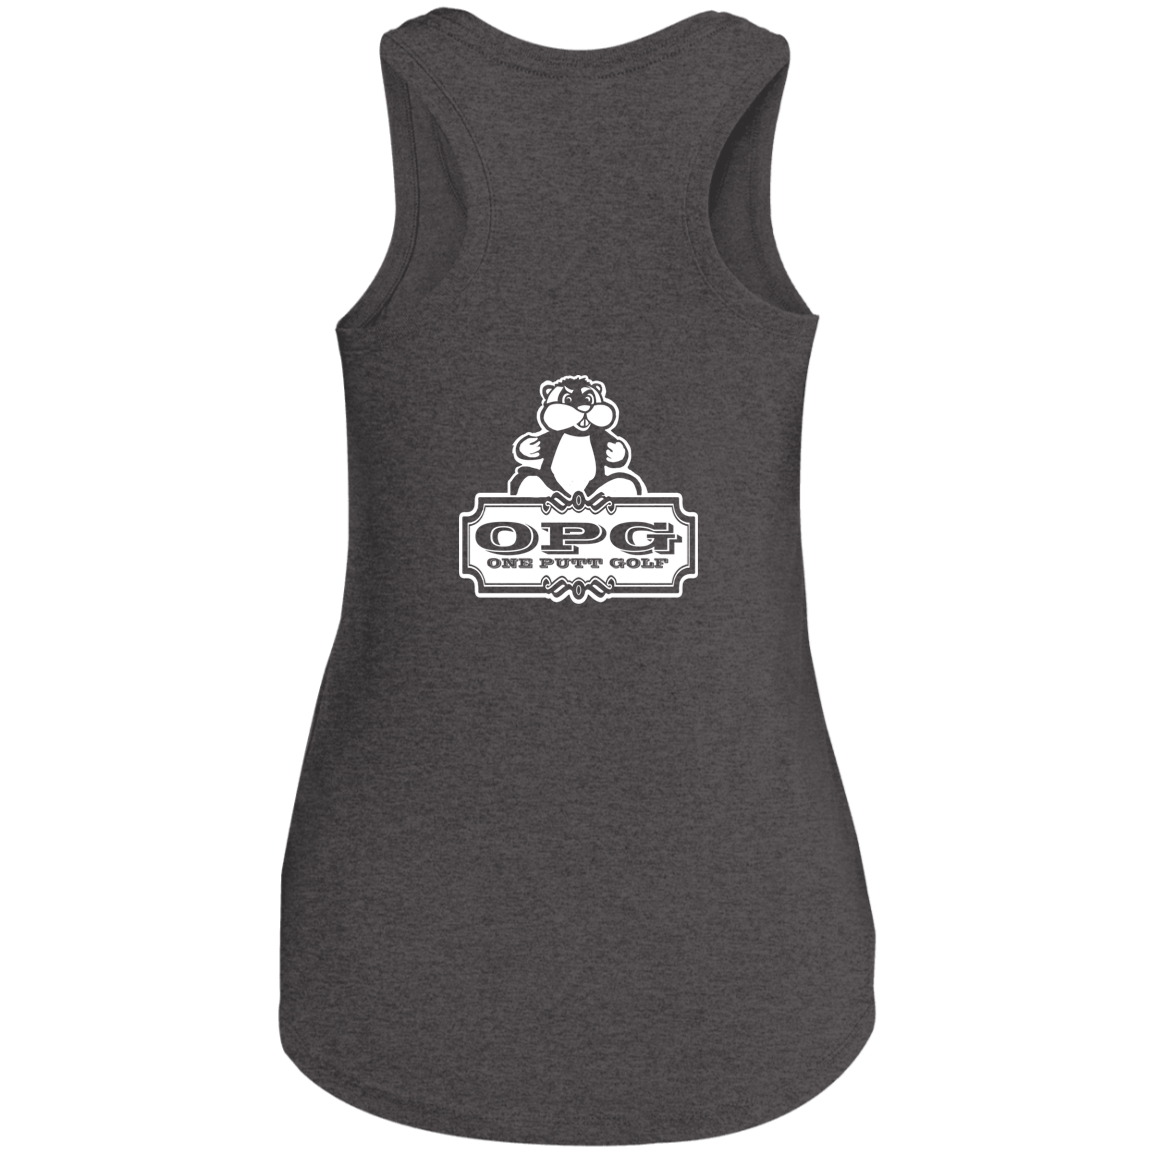 OPG Custom Design #29. Who's Your Caddy? Caddy Shack Bill Murray Fan Art. Ladies' Perfect Tri Racerback Tank